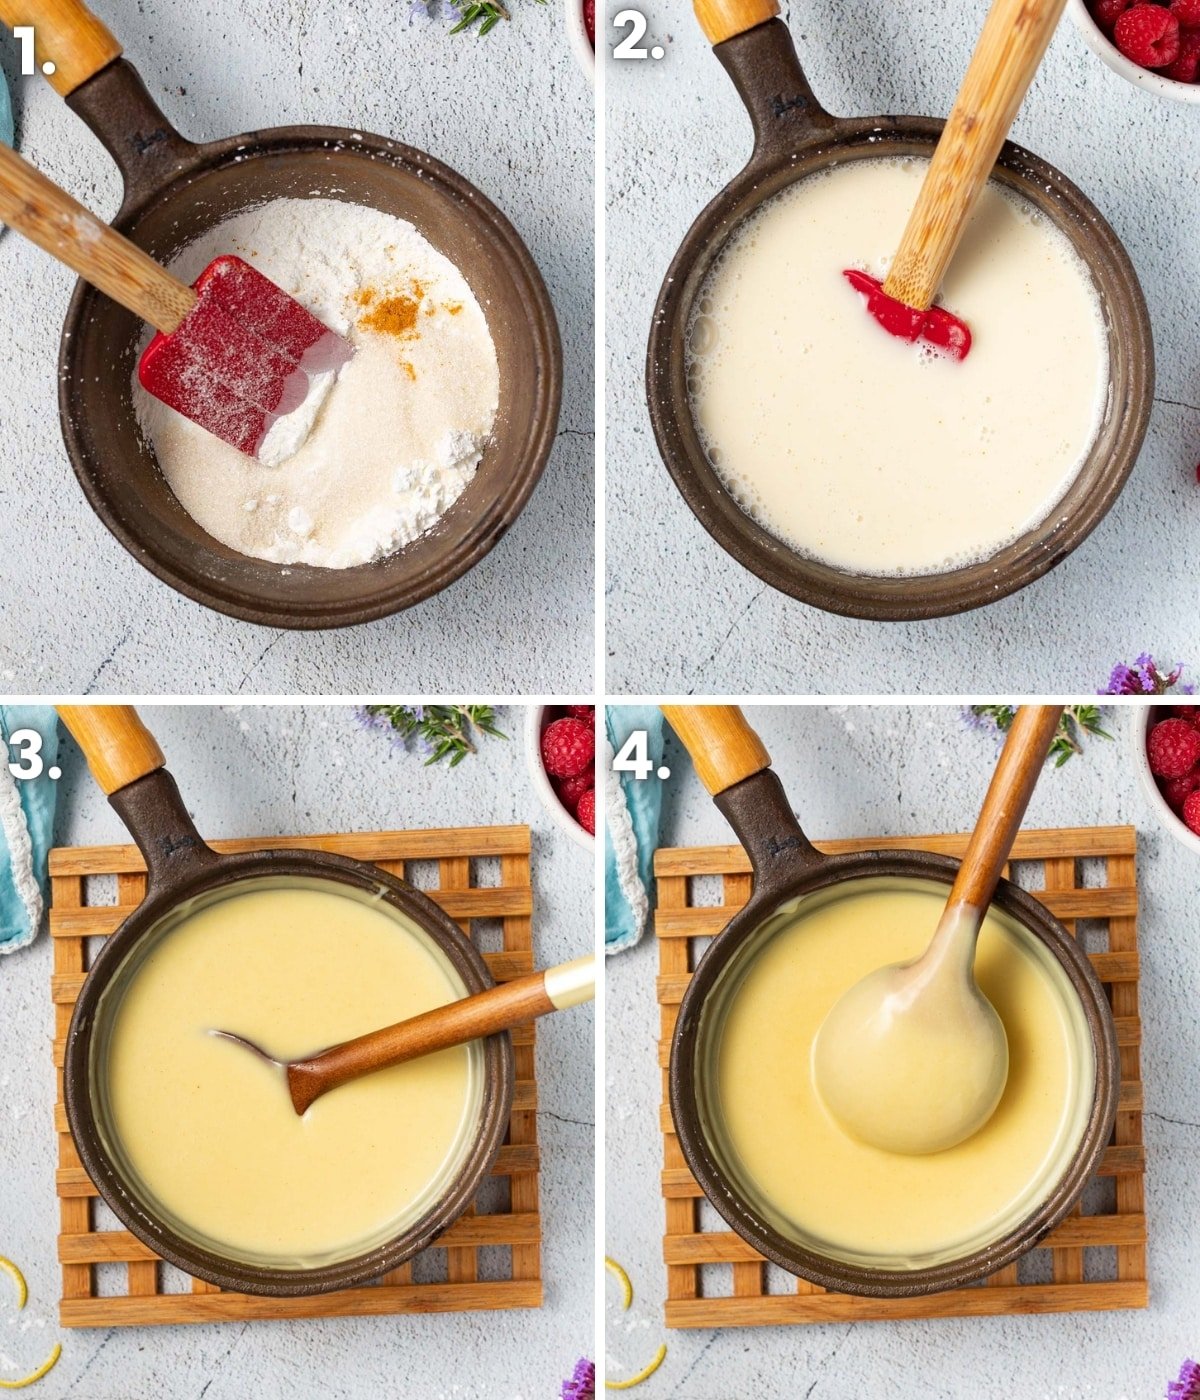 process photos showing how to make vegan custard as per the written instructions